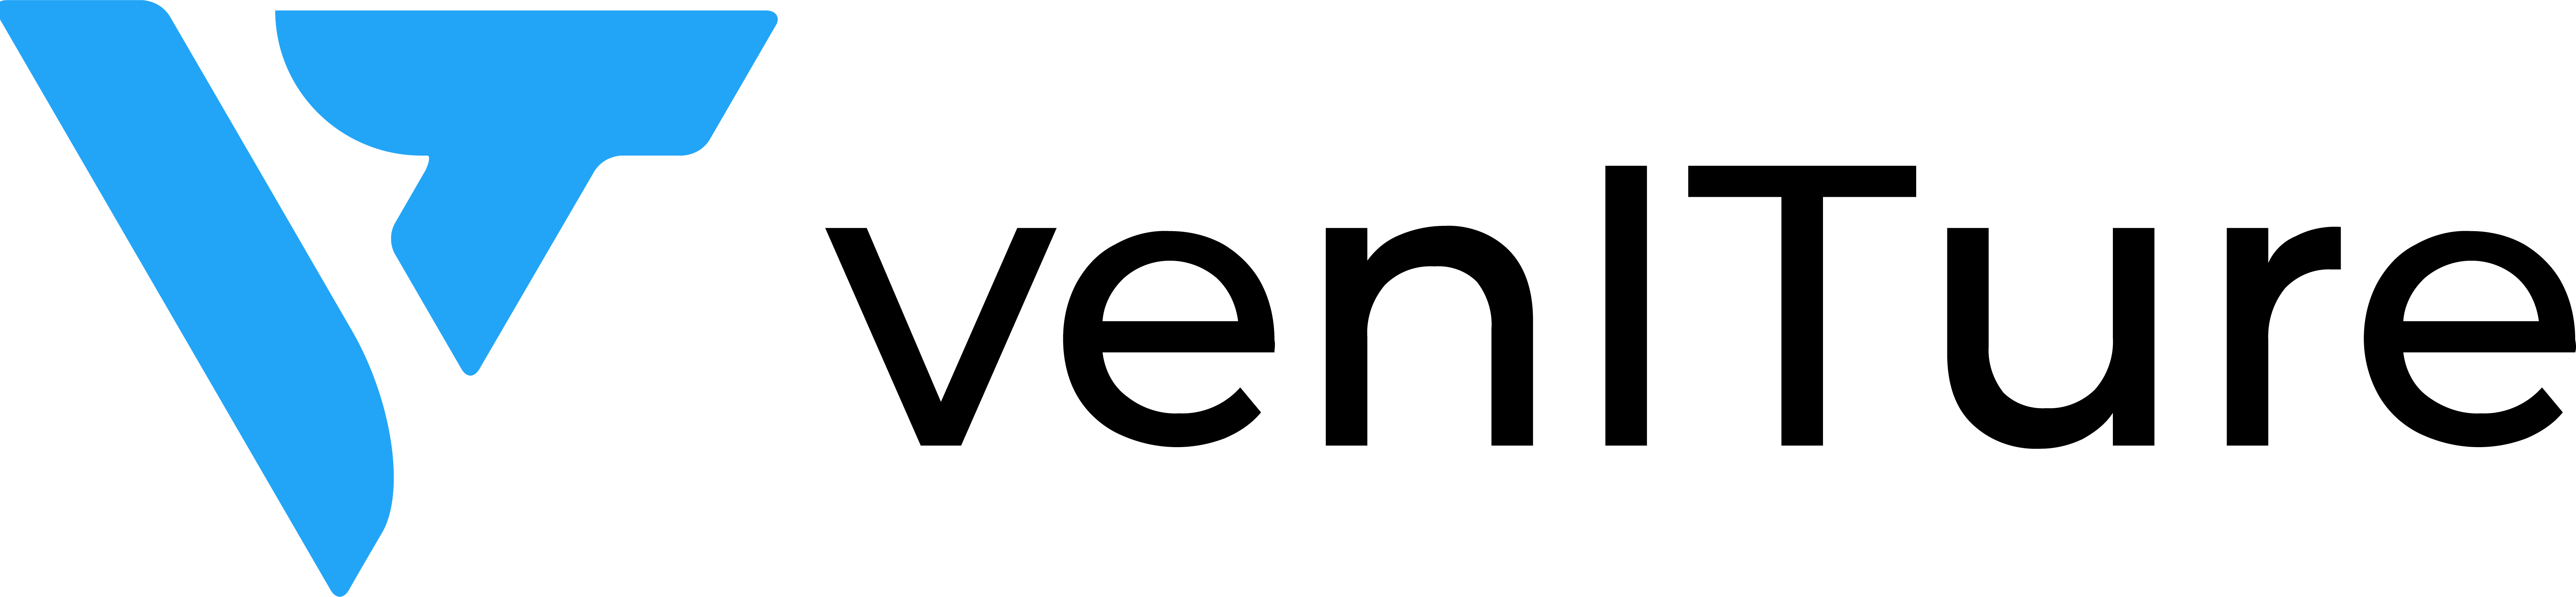 Veniture logo